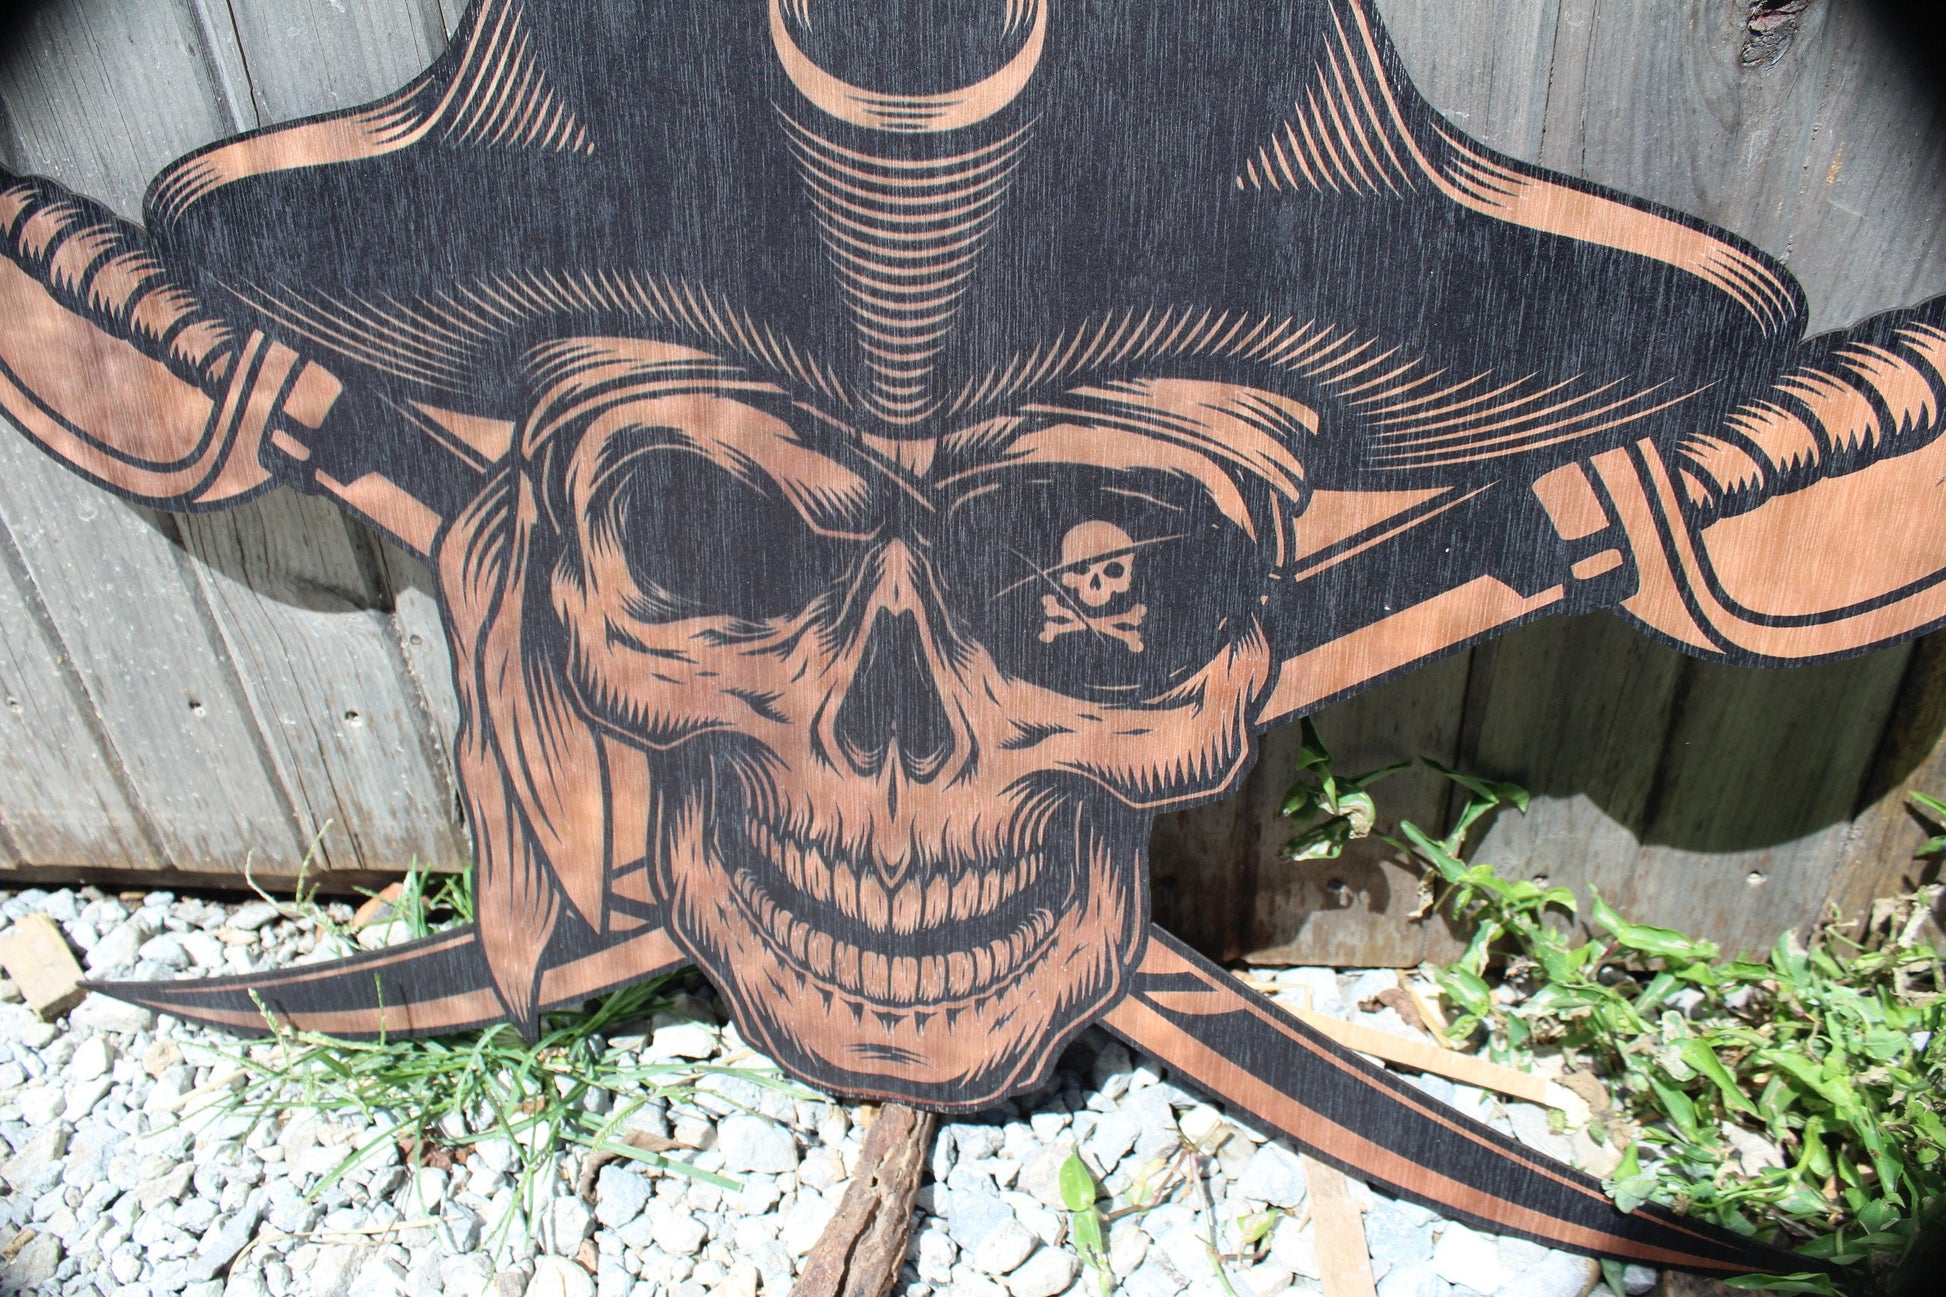 Huge Pirate Skeleton Cut Out UV Printed Halloween Party Theme Wood Wall Decoration Skull Sword Cross Bones Ship Flying Dutchman Nautical